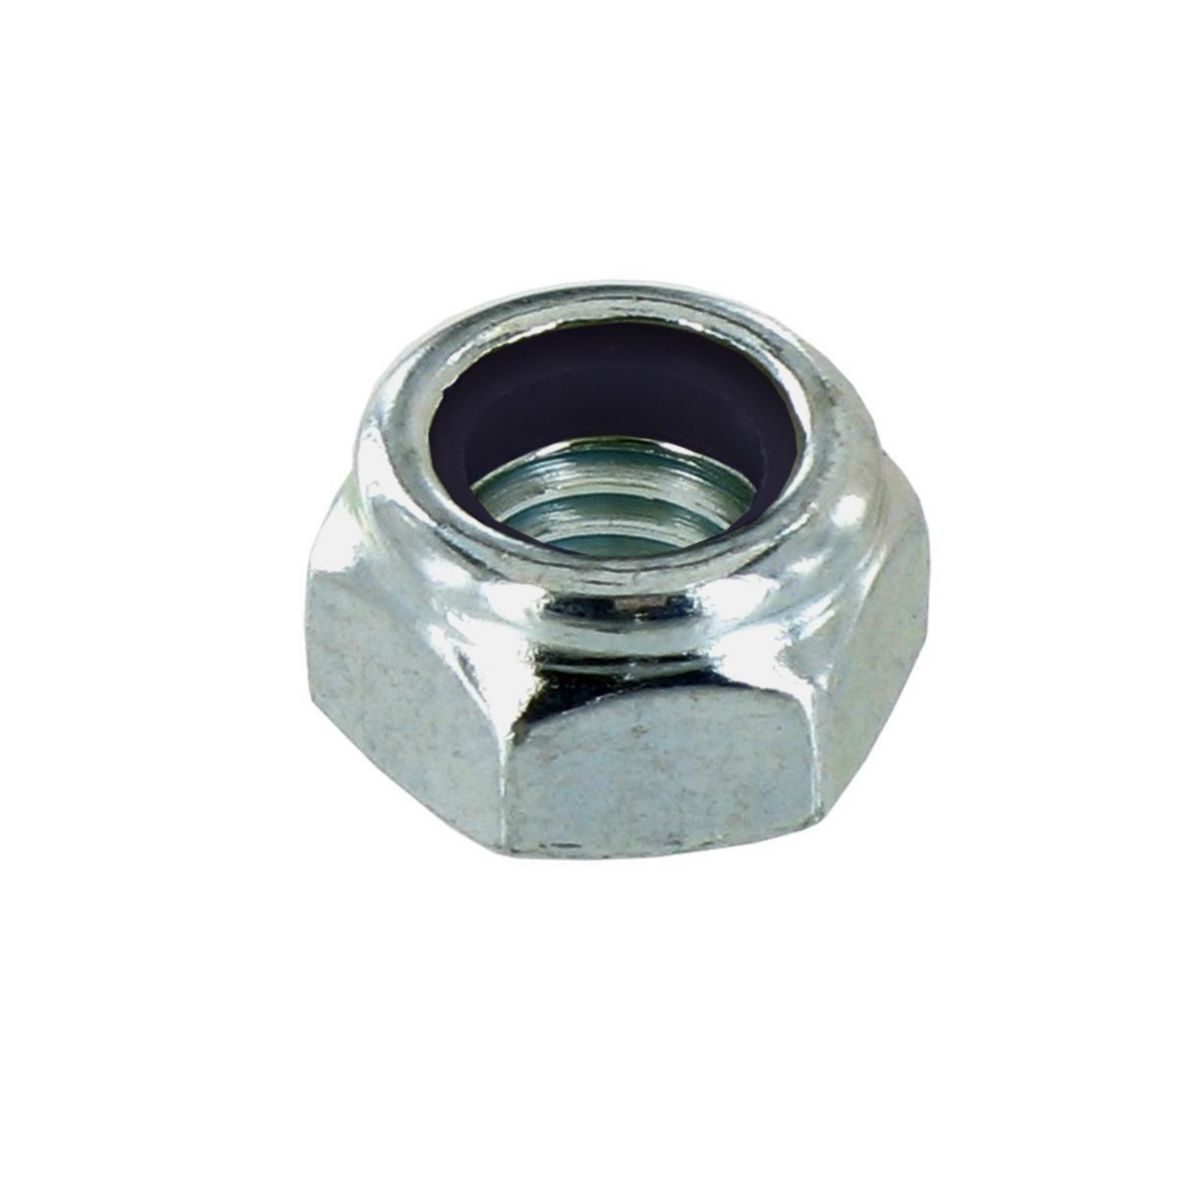 AZI self-locking nut 10 mm, 8 pieces.